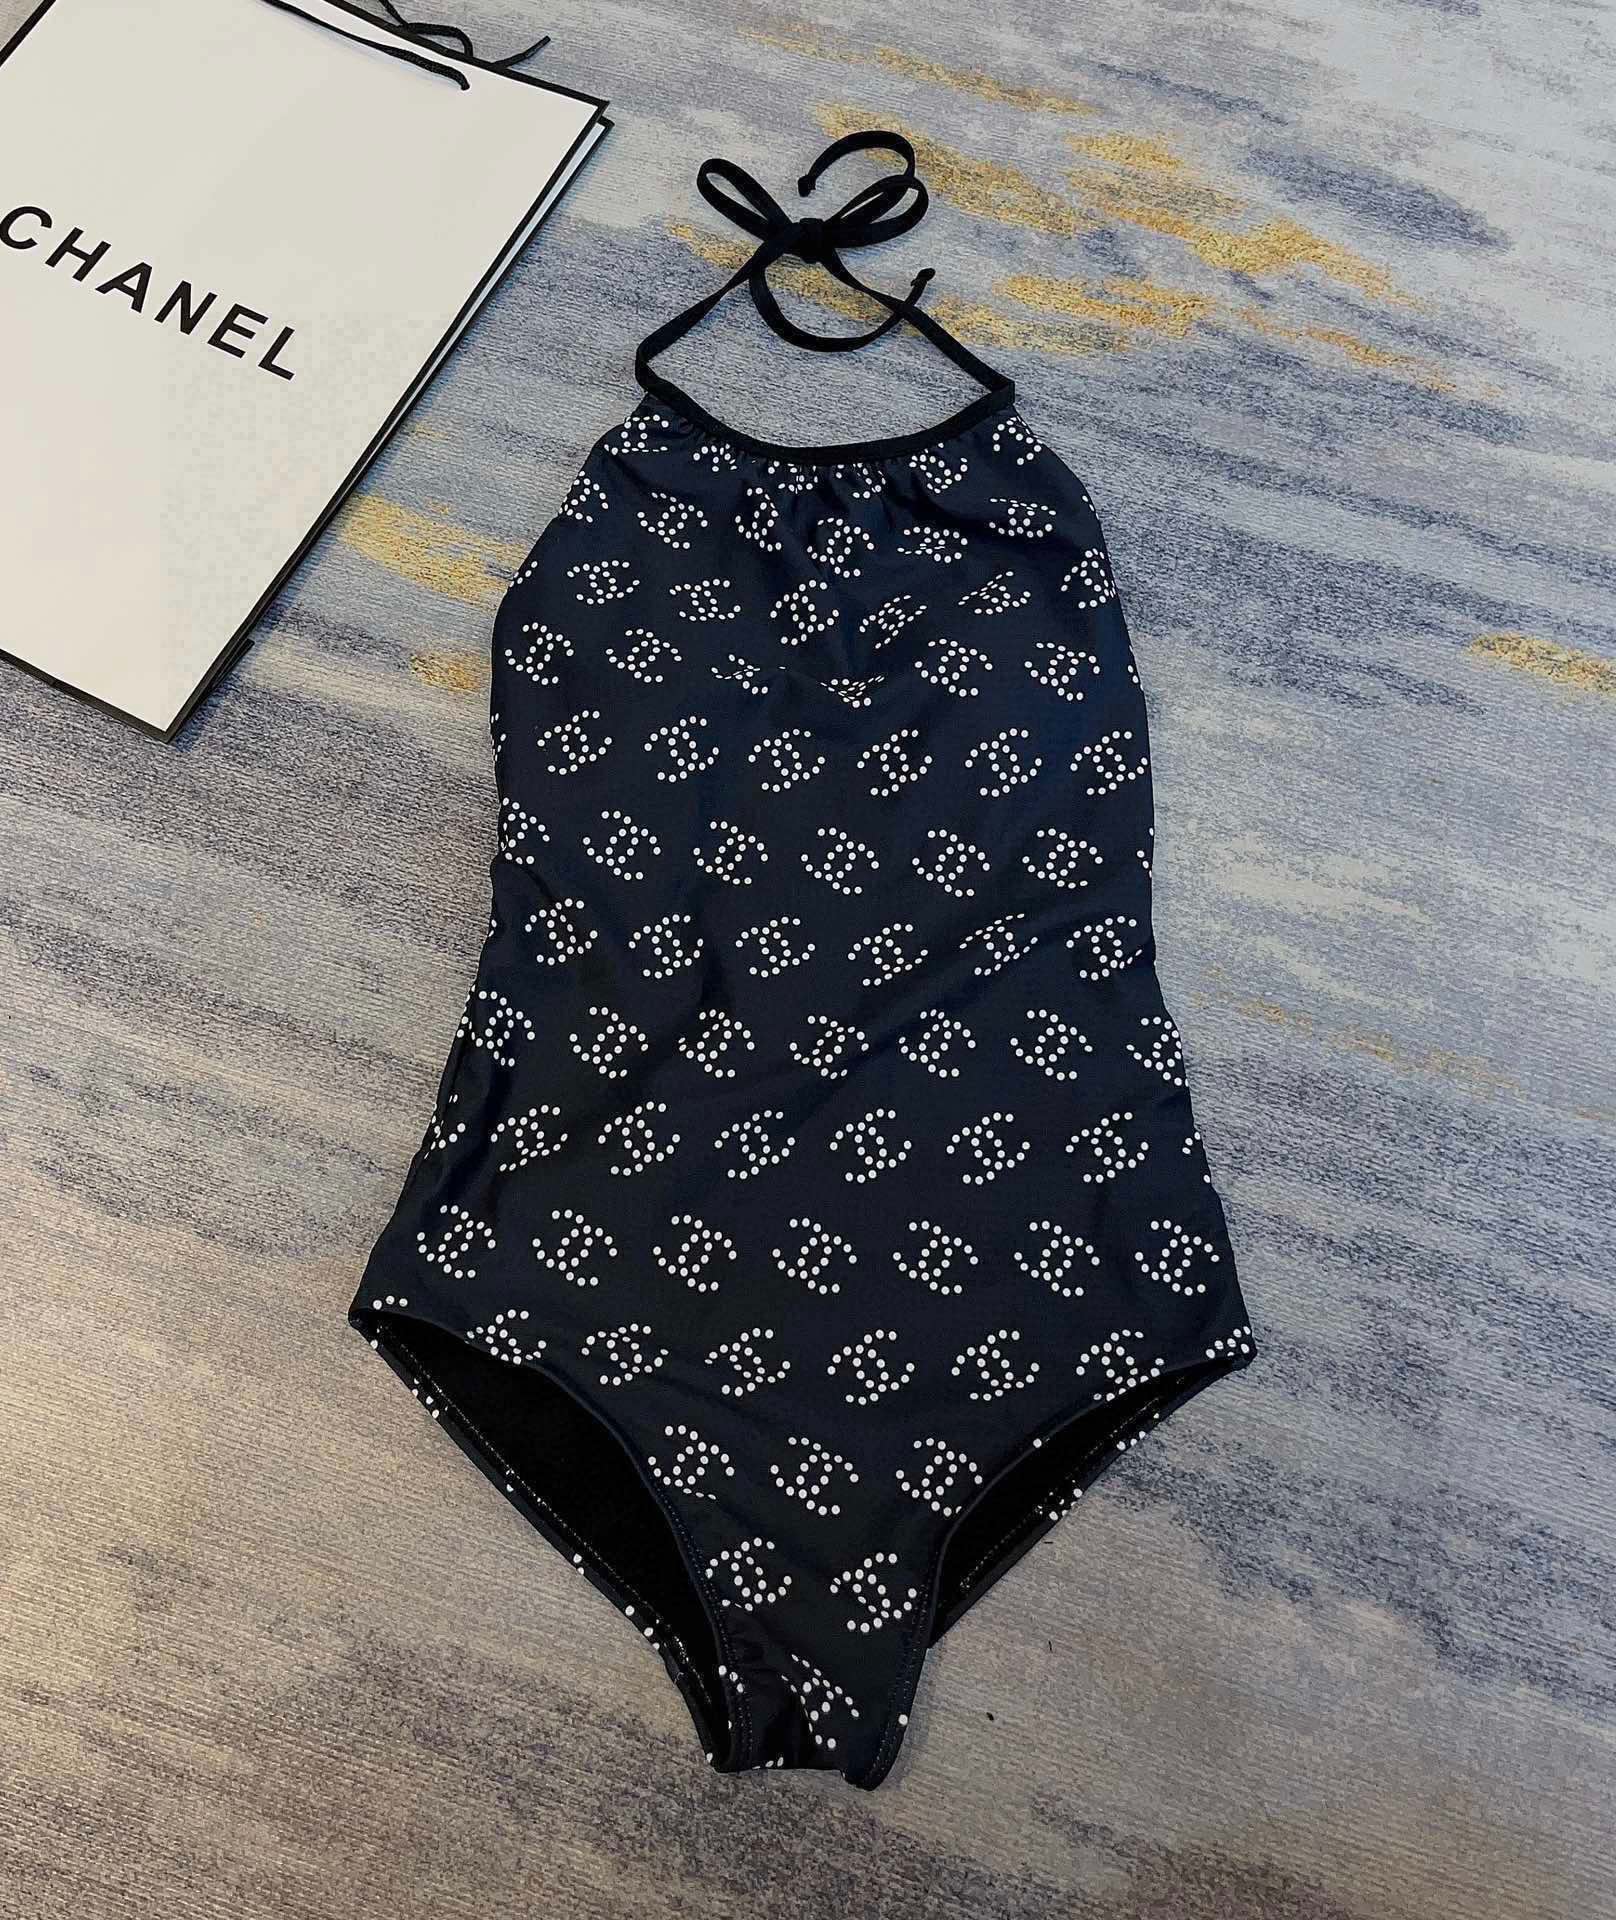 Chanel香奈儿连体泳衣适合多种场景的游泳衣️海边游泳池温泉水上乐园漂流都可以内搭也完全可以连体设计遮